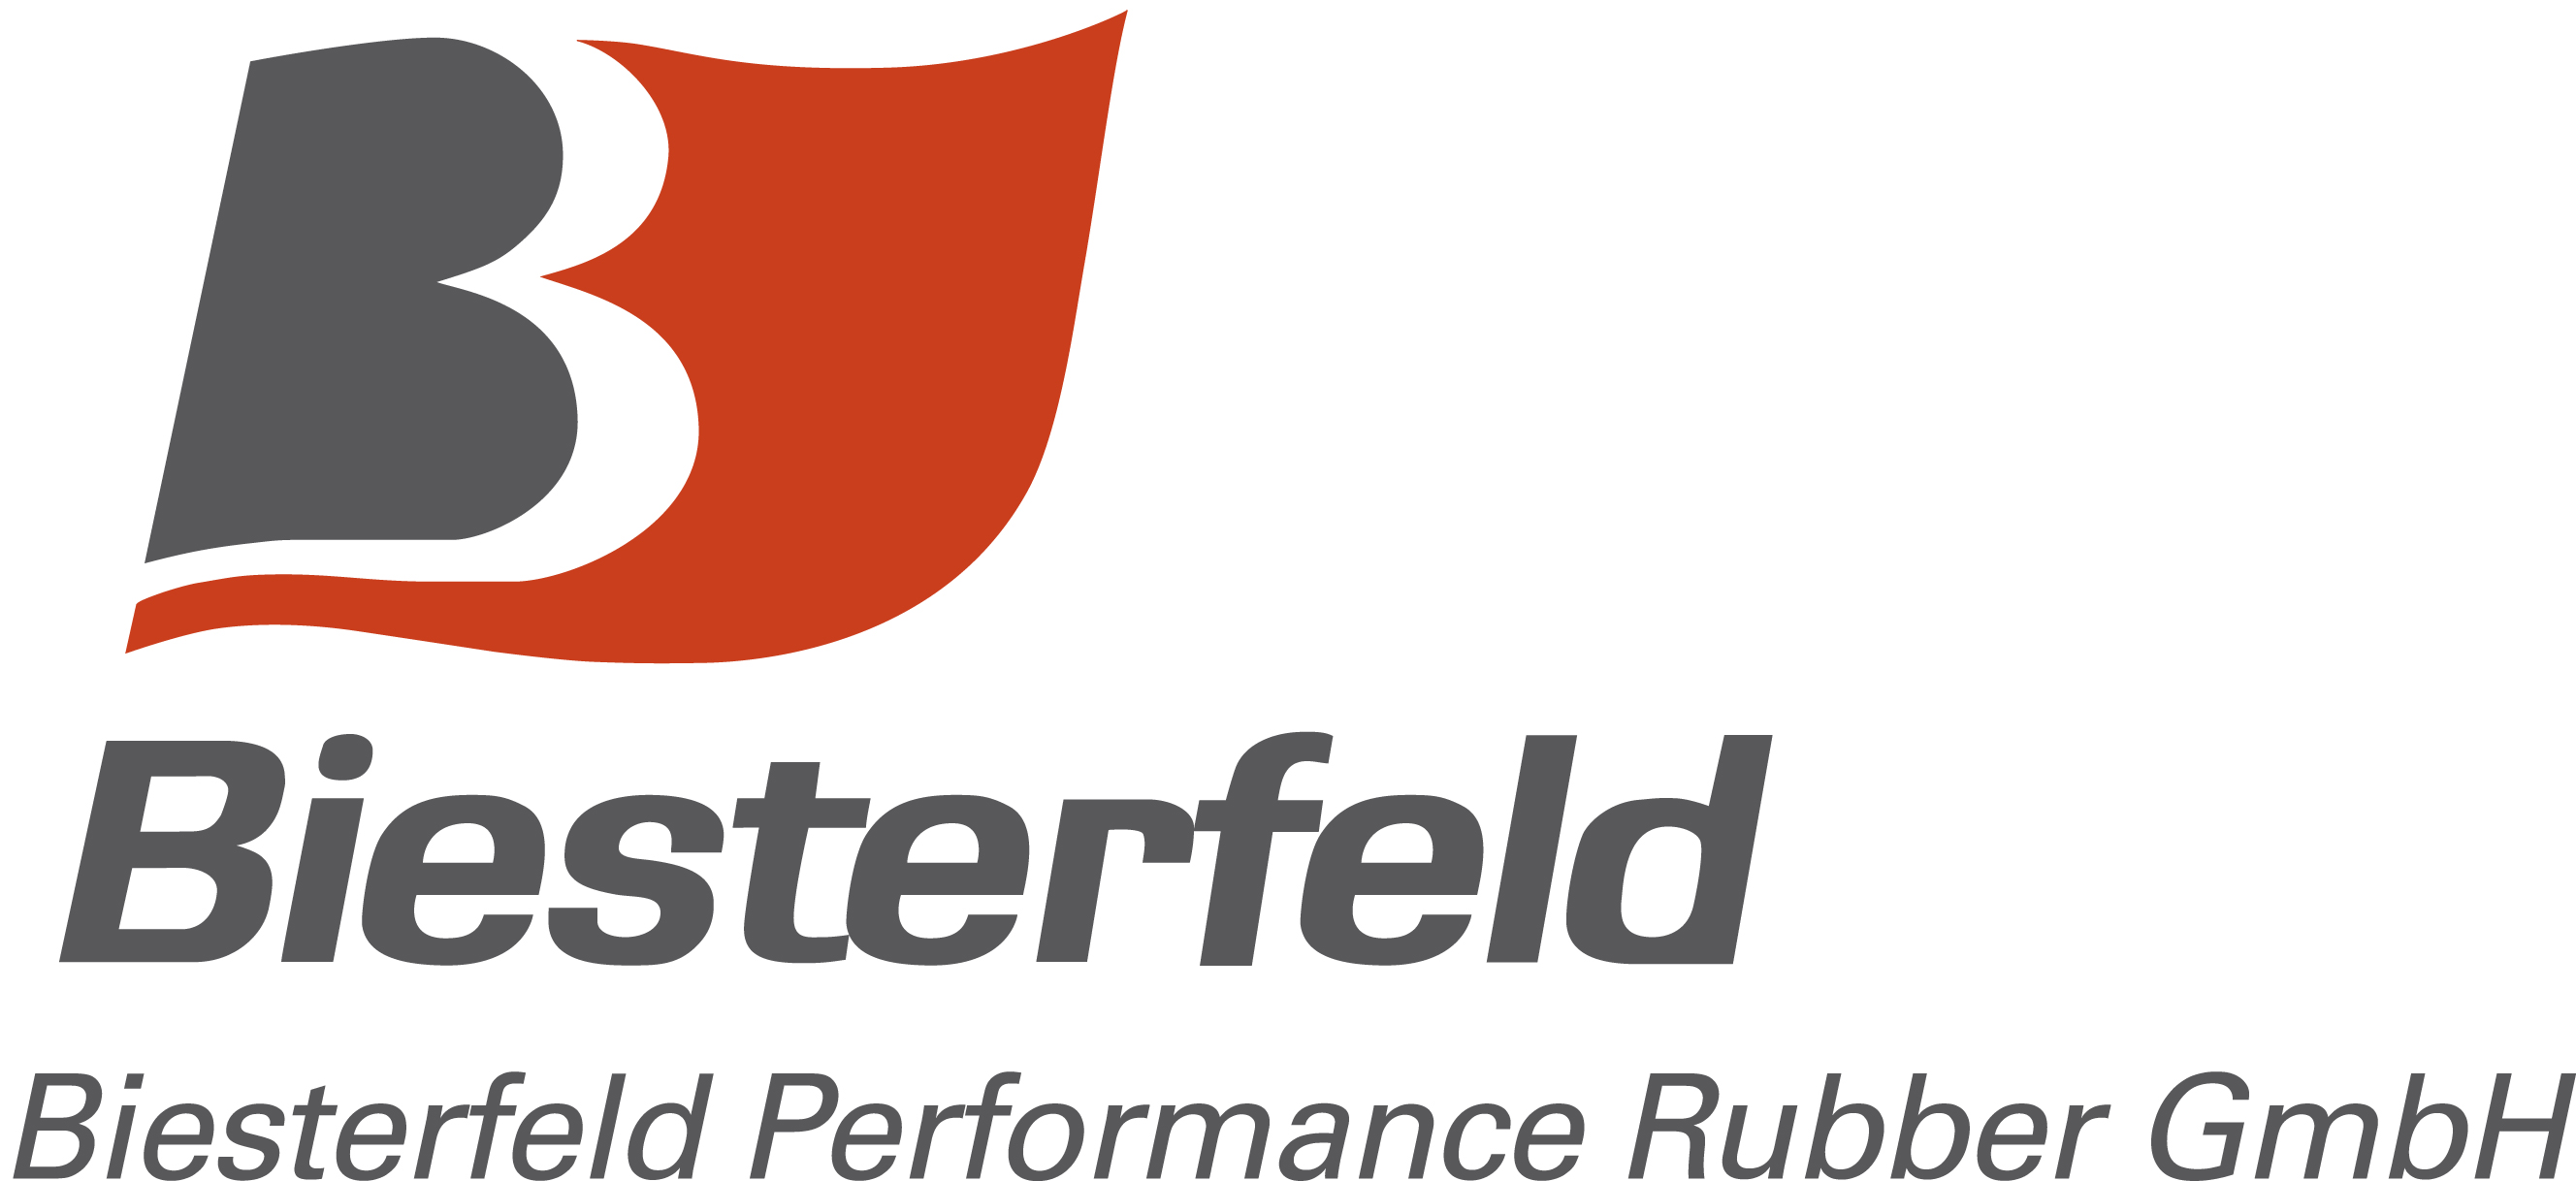 Biesterfeld Performance Rubber GmbH 002